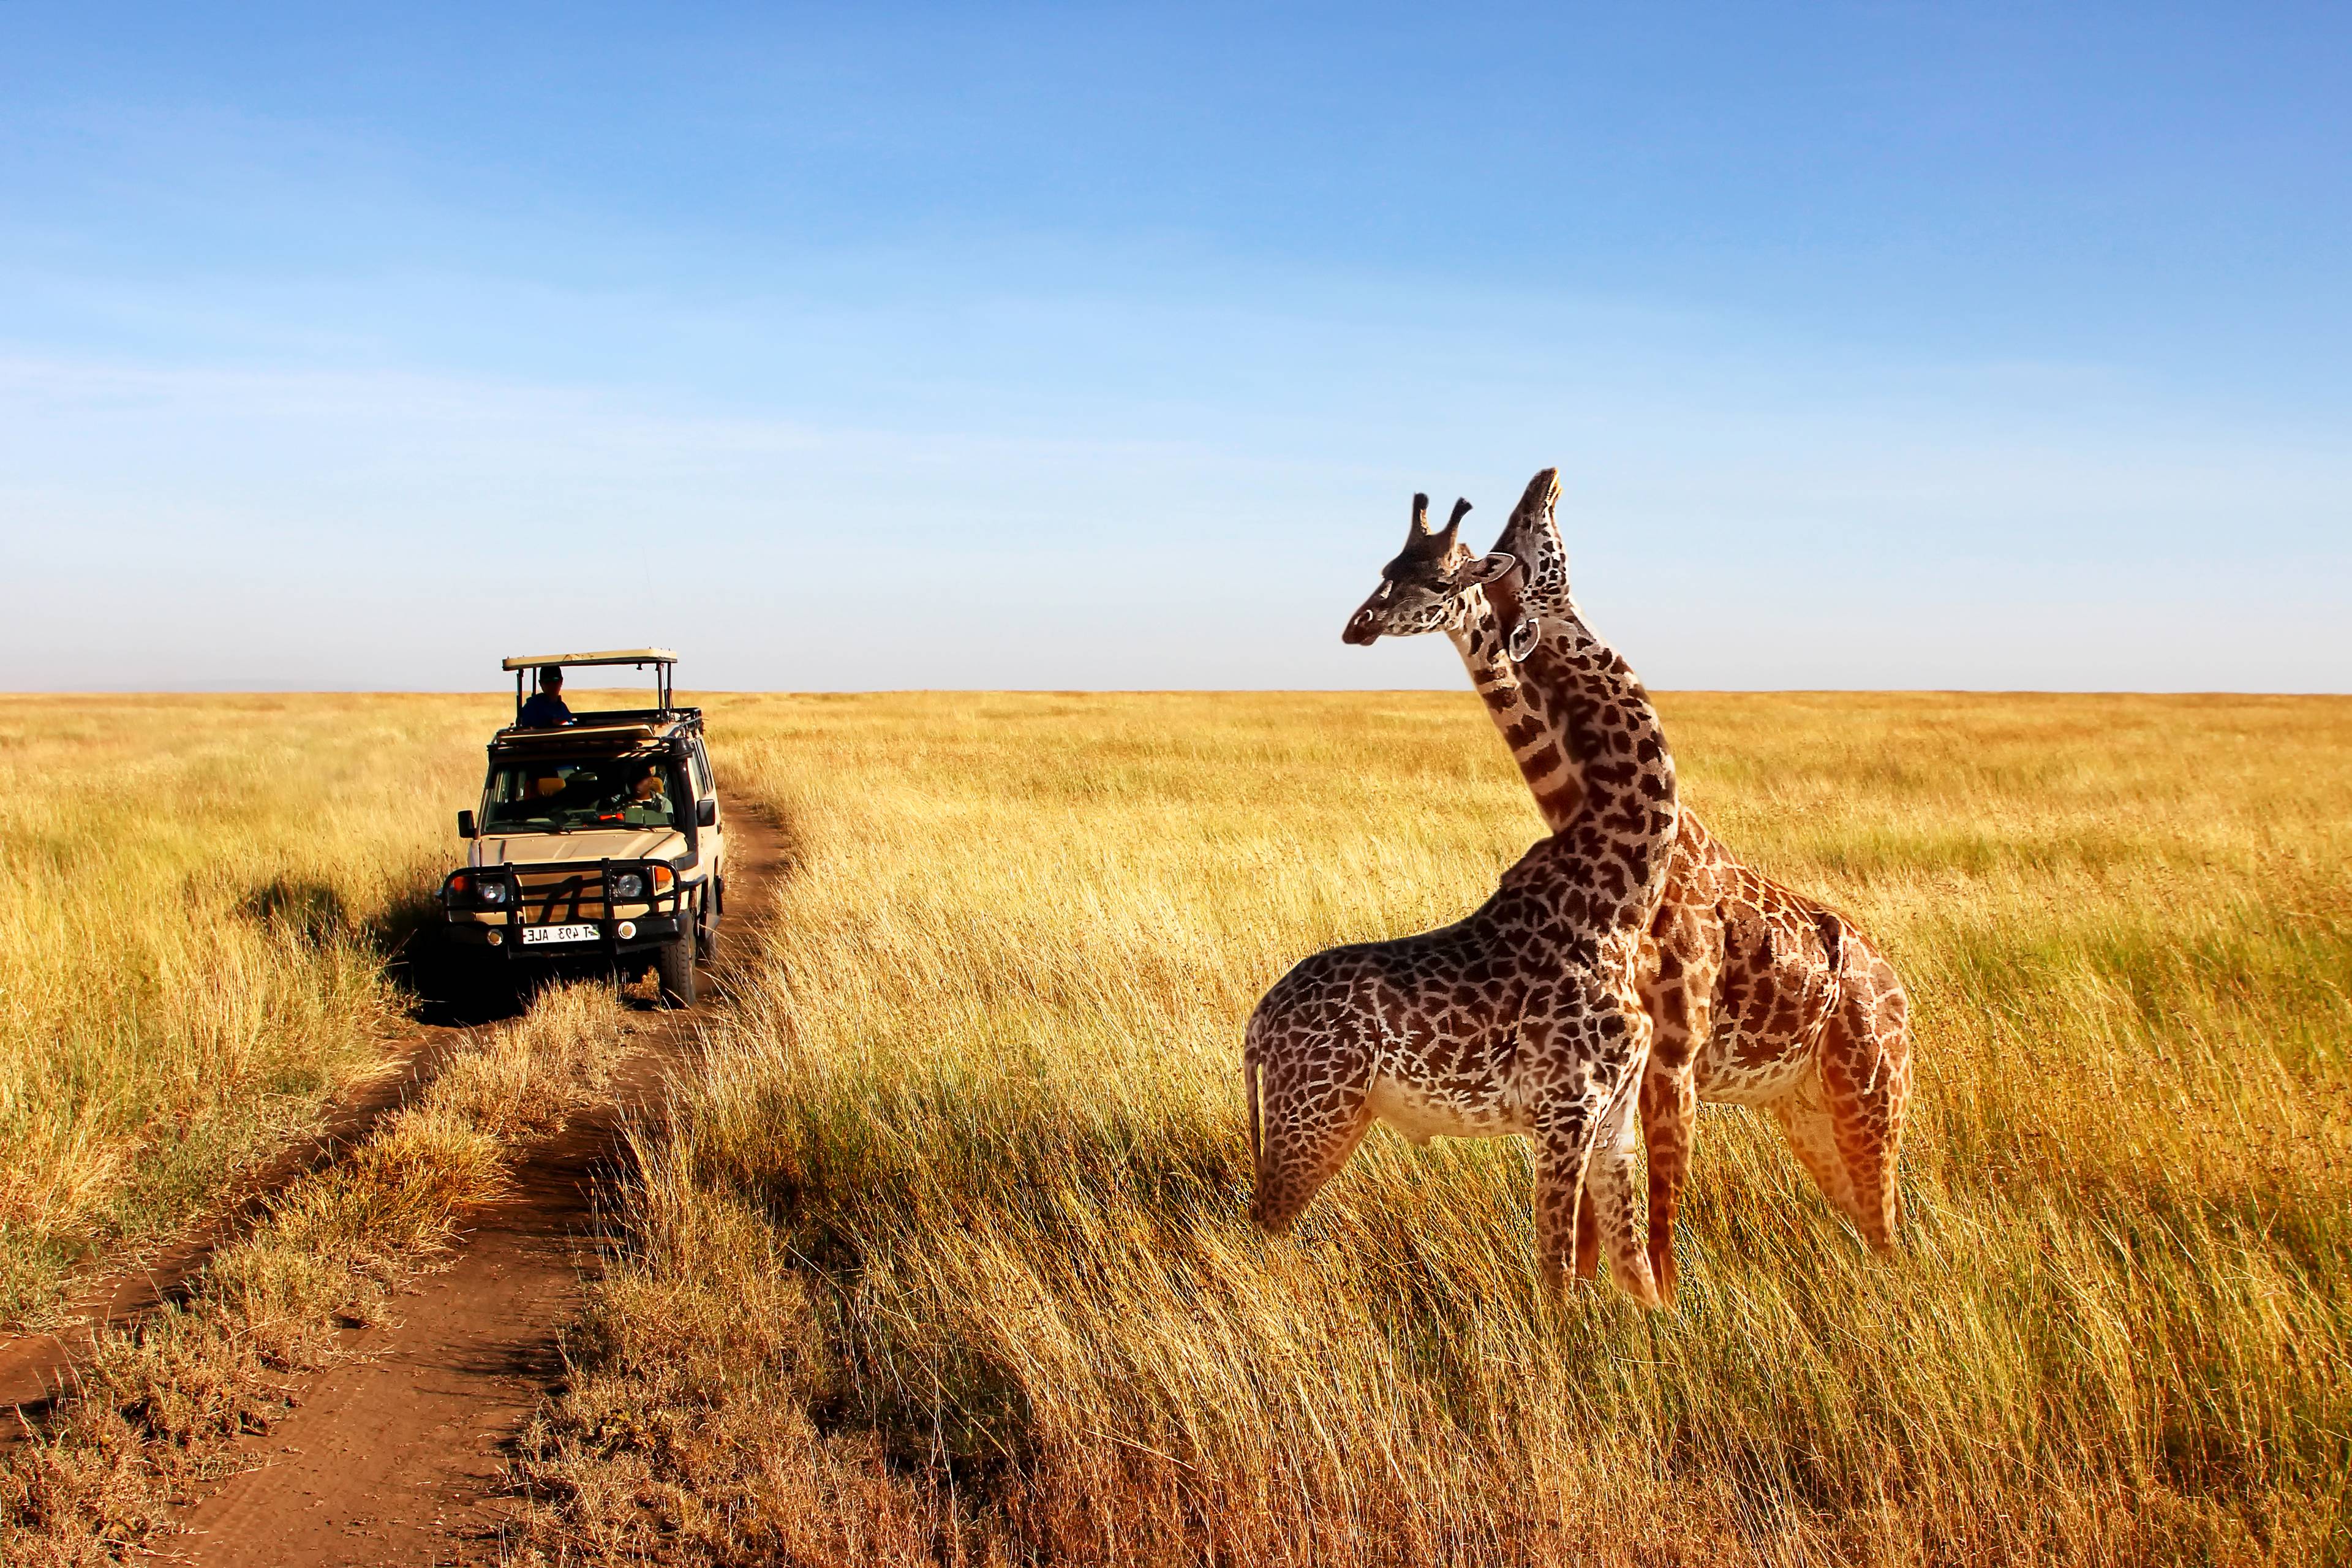 safari con vista giraffe